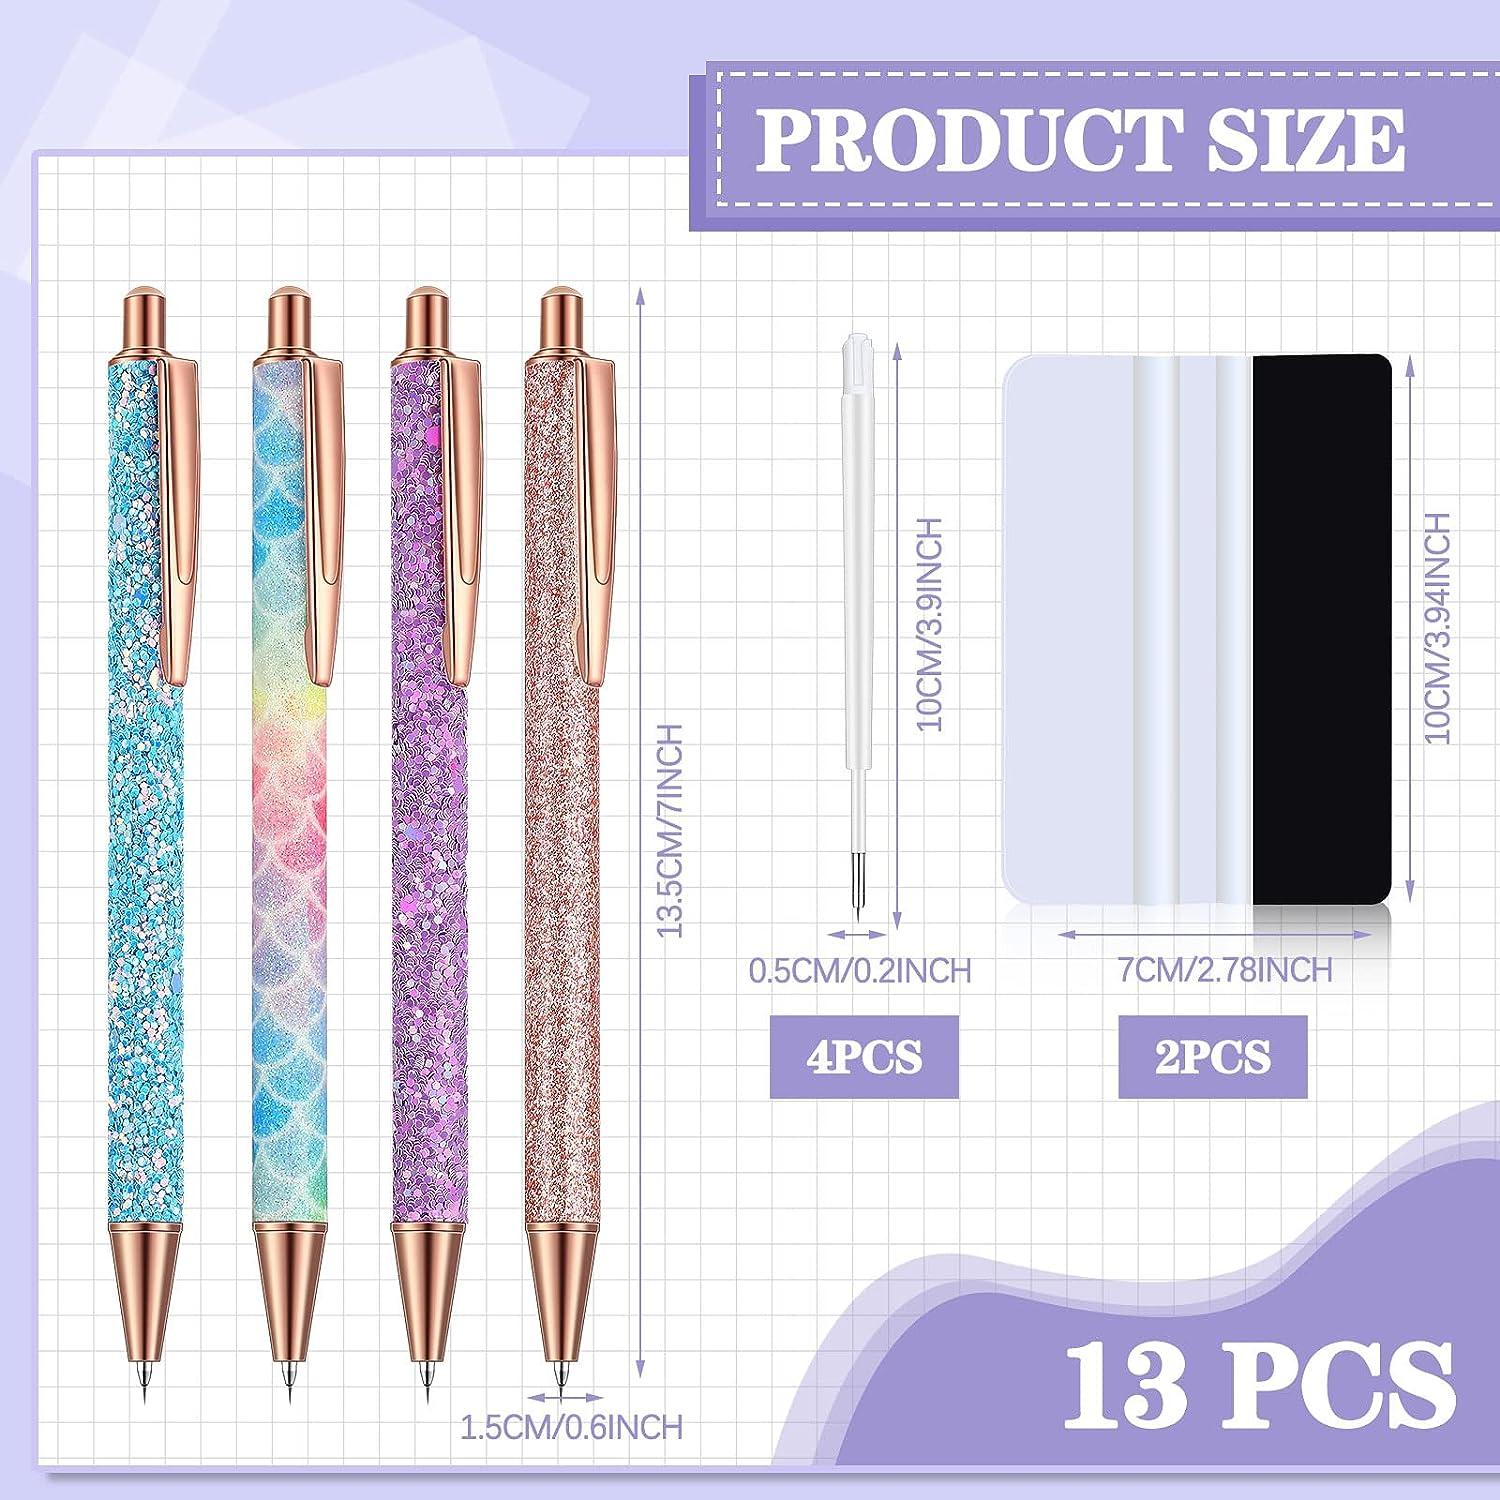 2 Pcs Air Release Weeding Tool Pin Pen Weeding Pen for Vinyl Glitter  Weeding Pen Craft Vinyl Tool (Purple) 